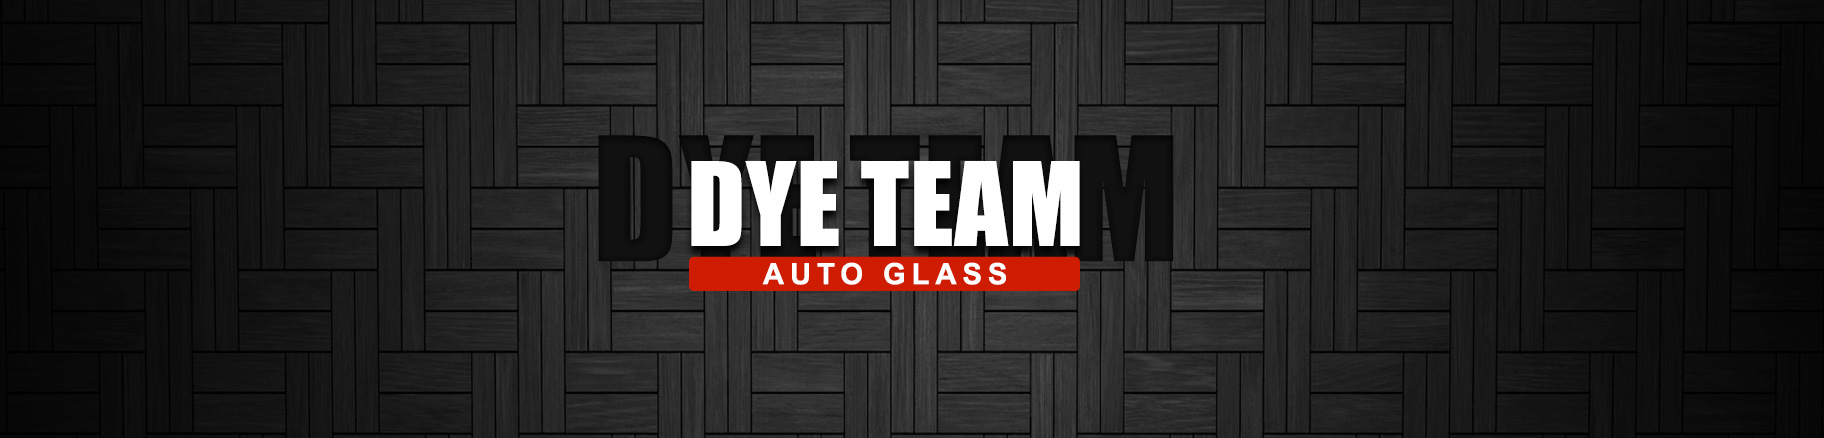 Dye Team Auto Glass - Belfast Maine